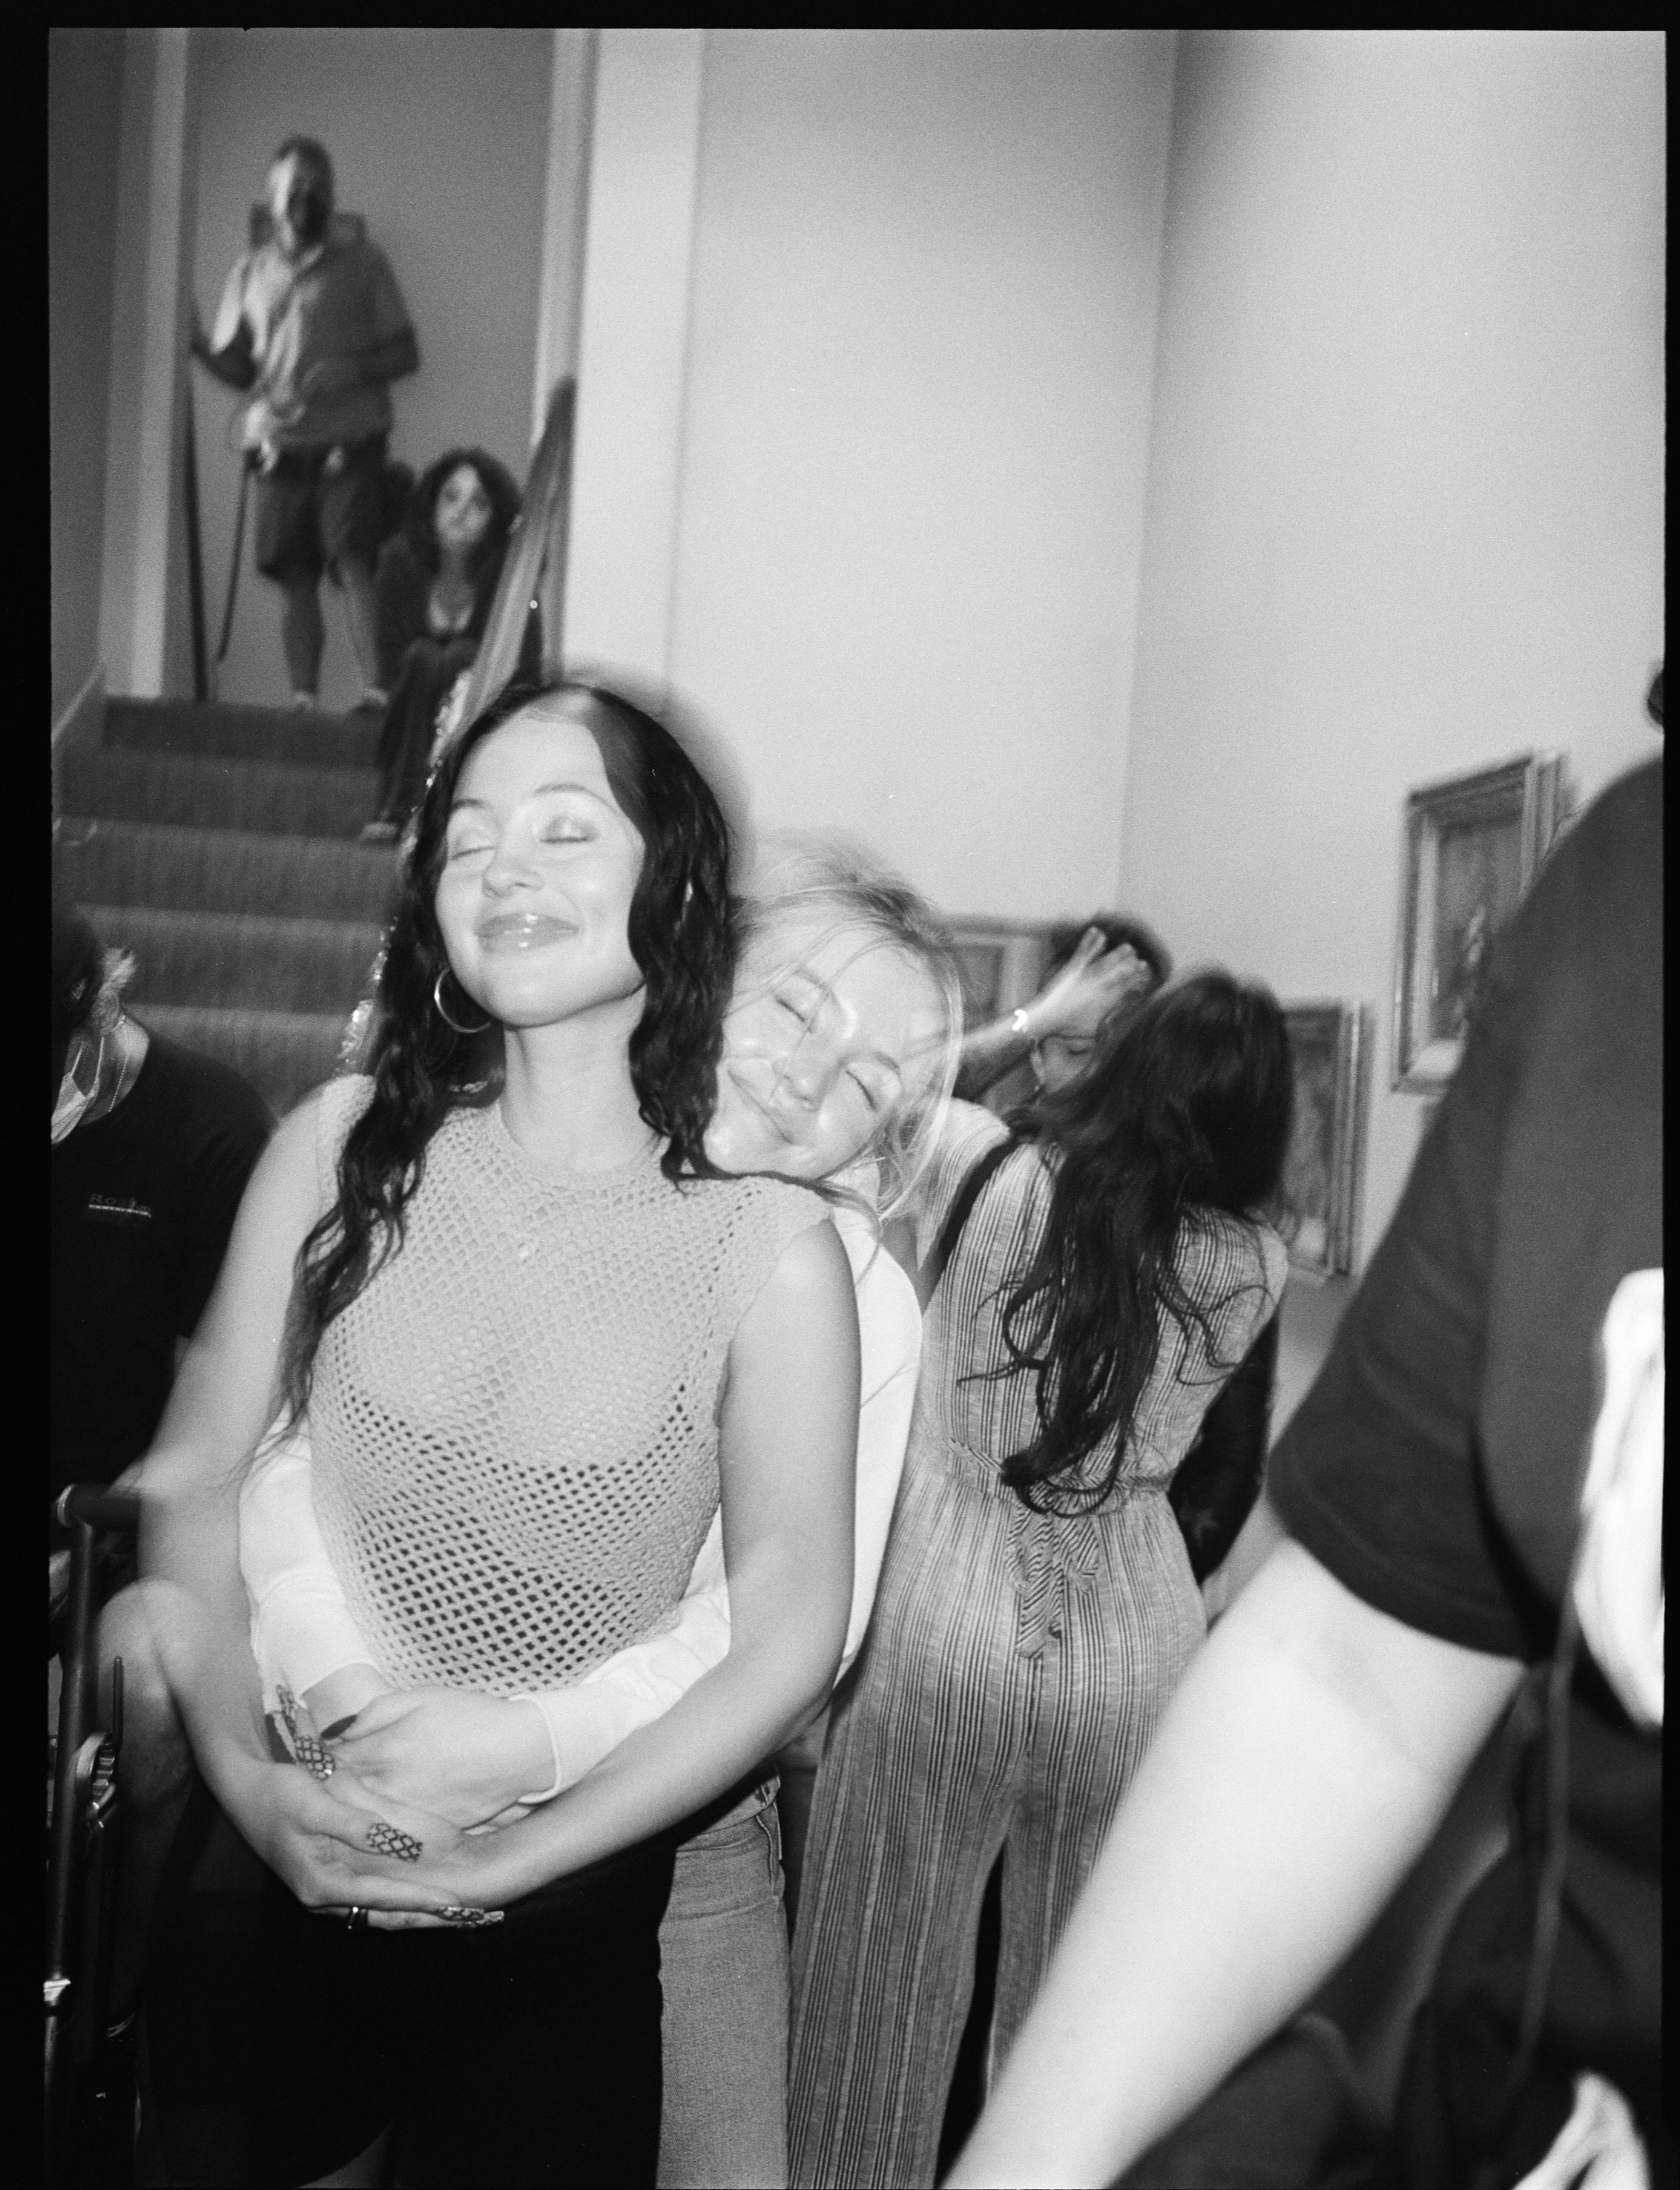 Sydney Sweeney hugs Alexa Demie in black and white behind-the-scenes images